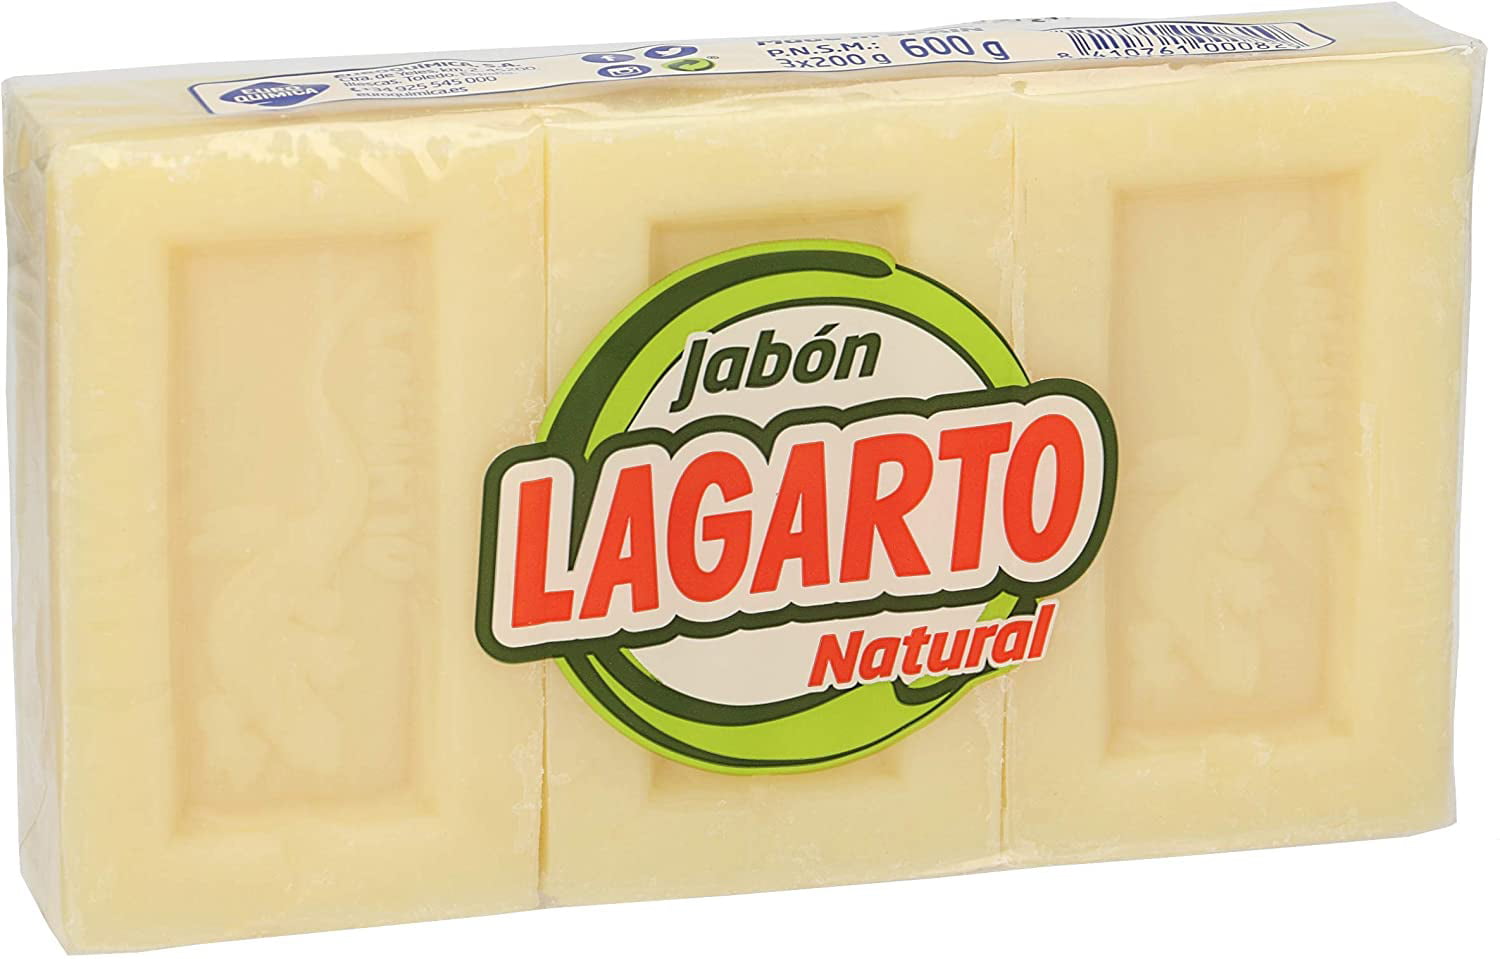 Jabon Lagarto (Lizard Soap) Natural soap 3 x 200 g - Walmart.com